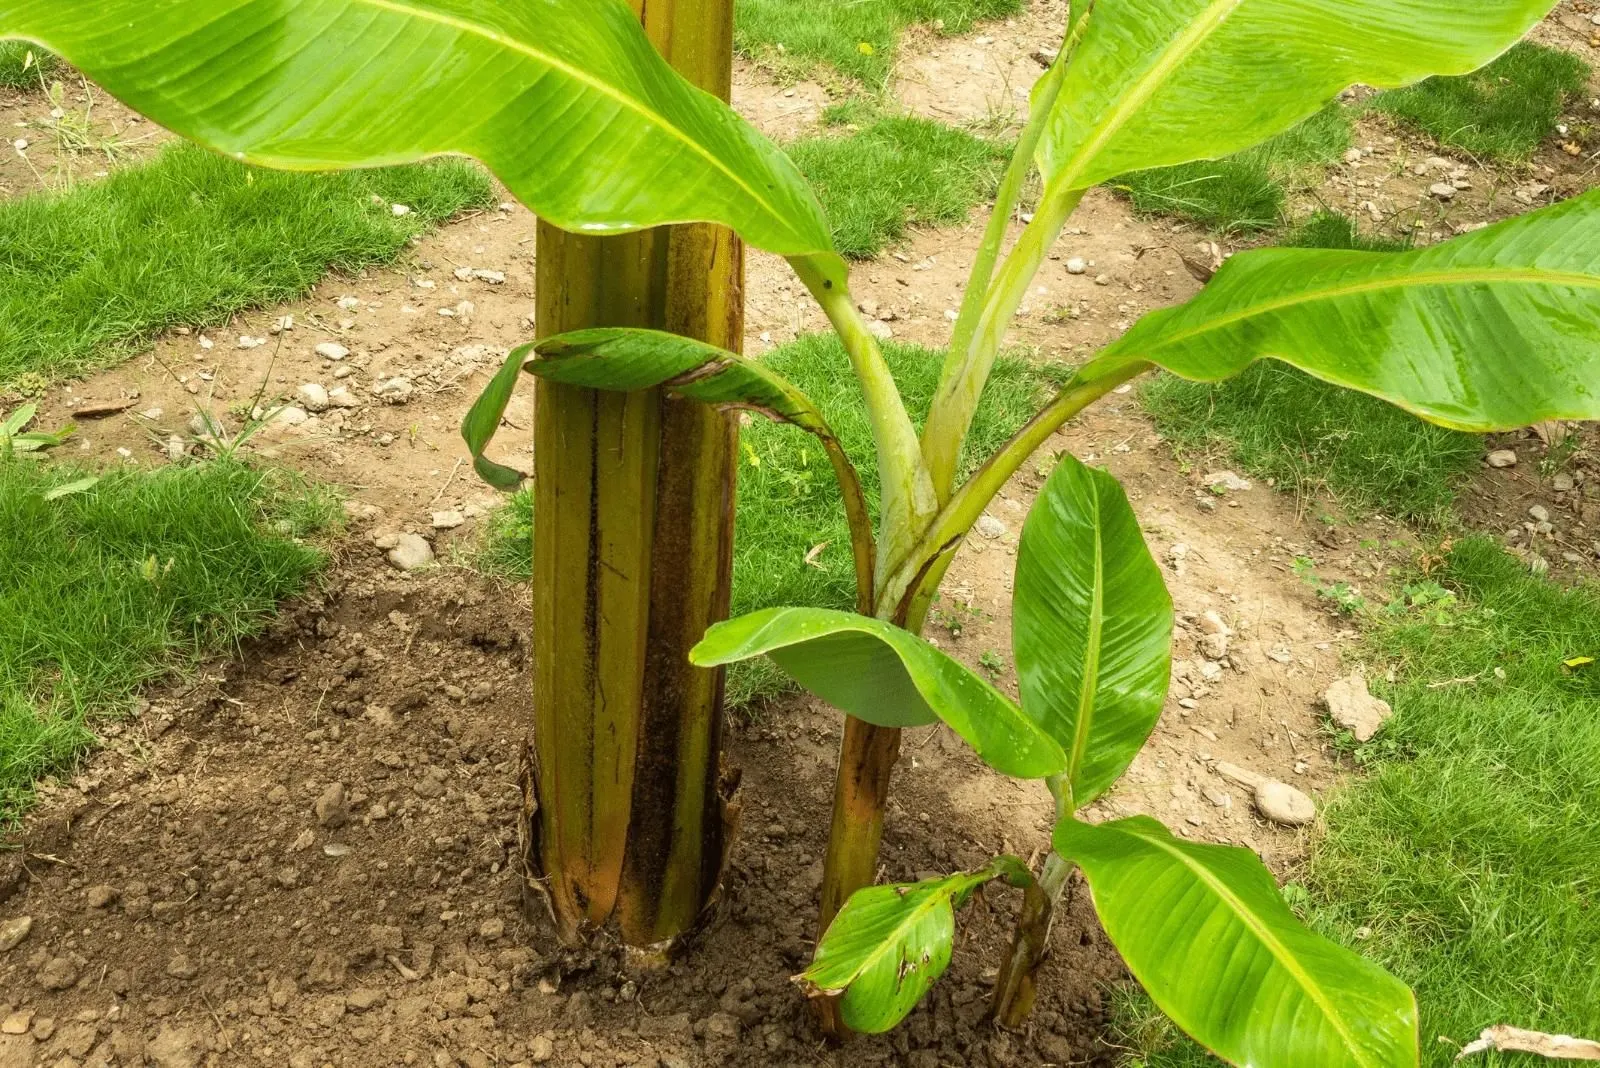 transplanted banana in the garden